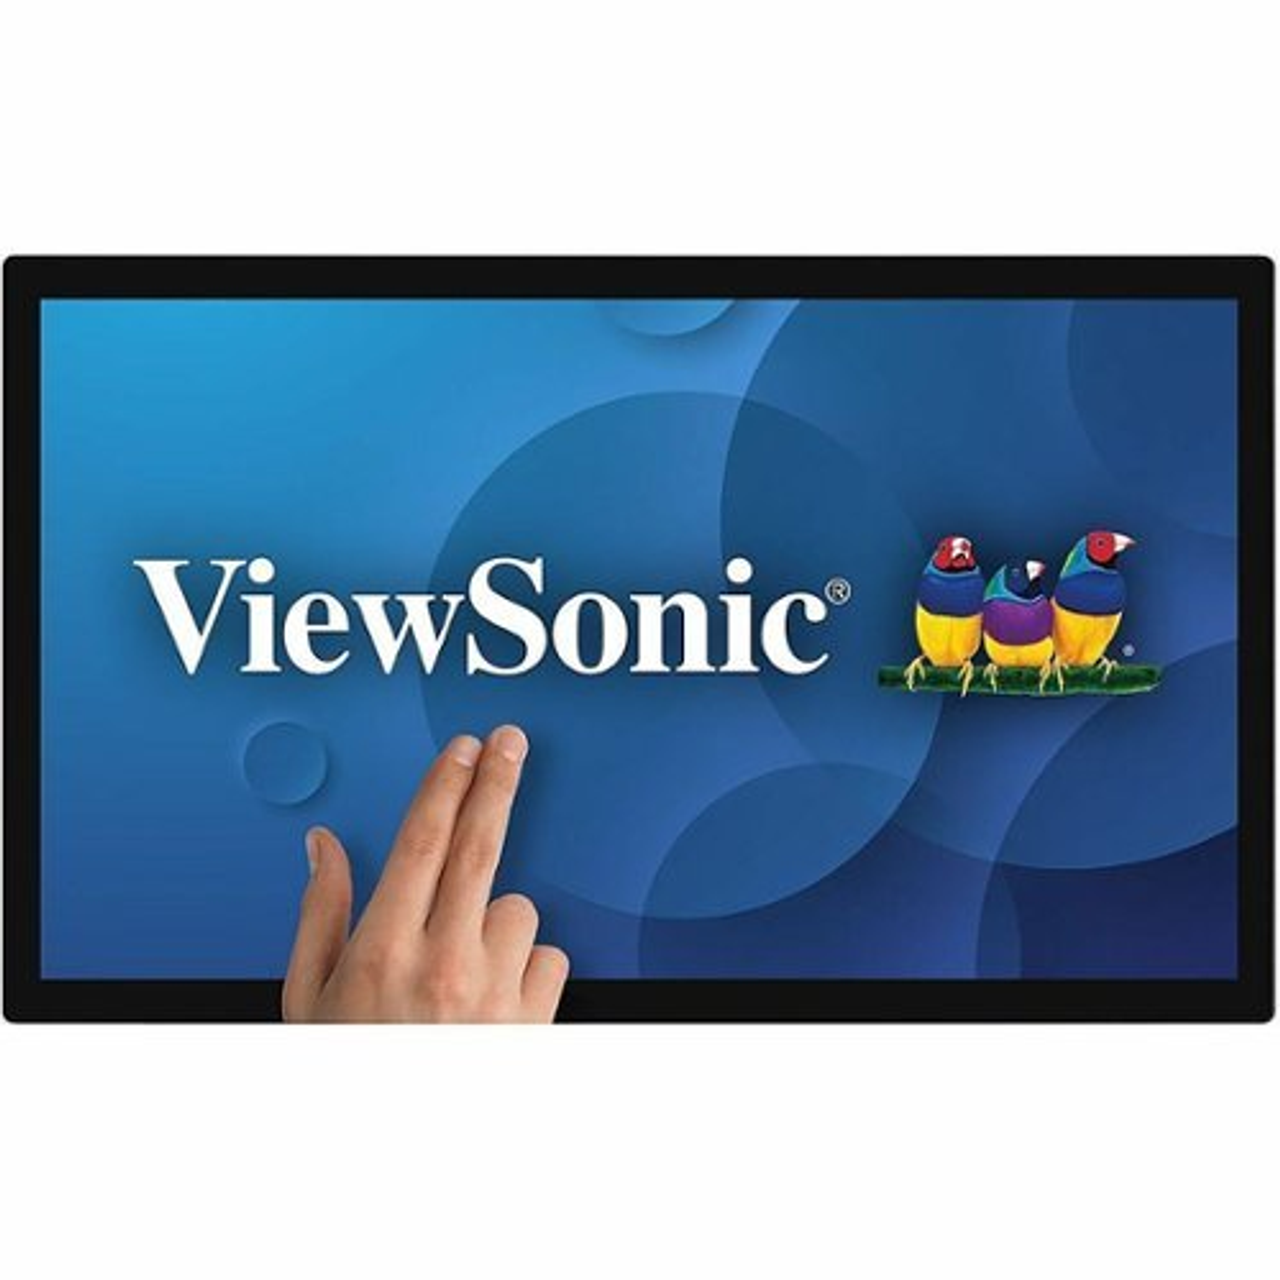 ViewSonic - TD3207 32" LCD FHD Touch Screen Monitor (HDMI, DisplayPort) - Black